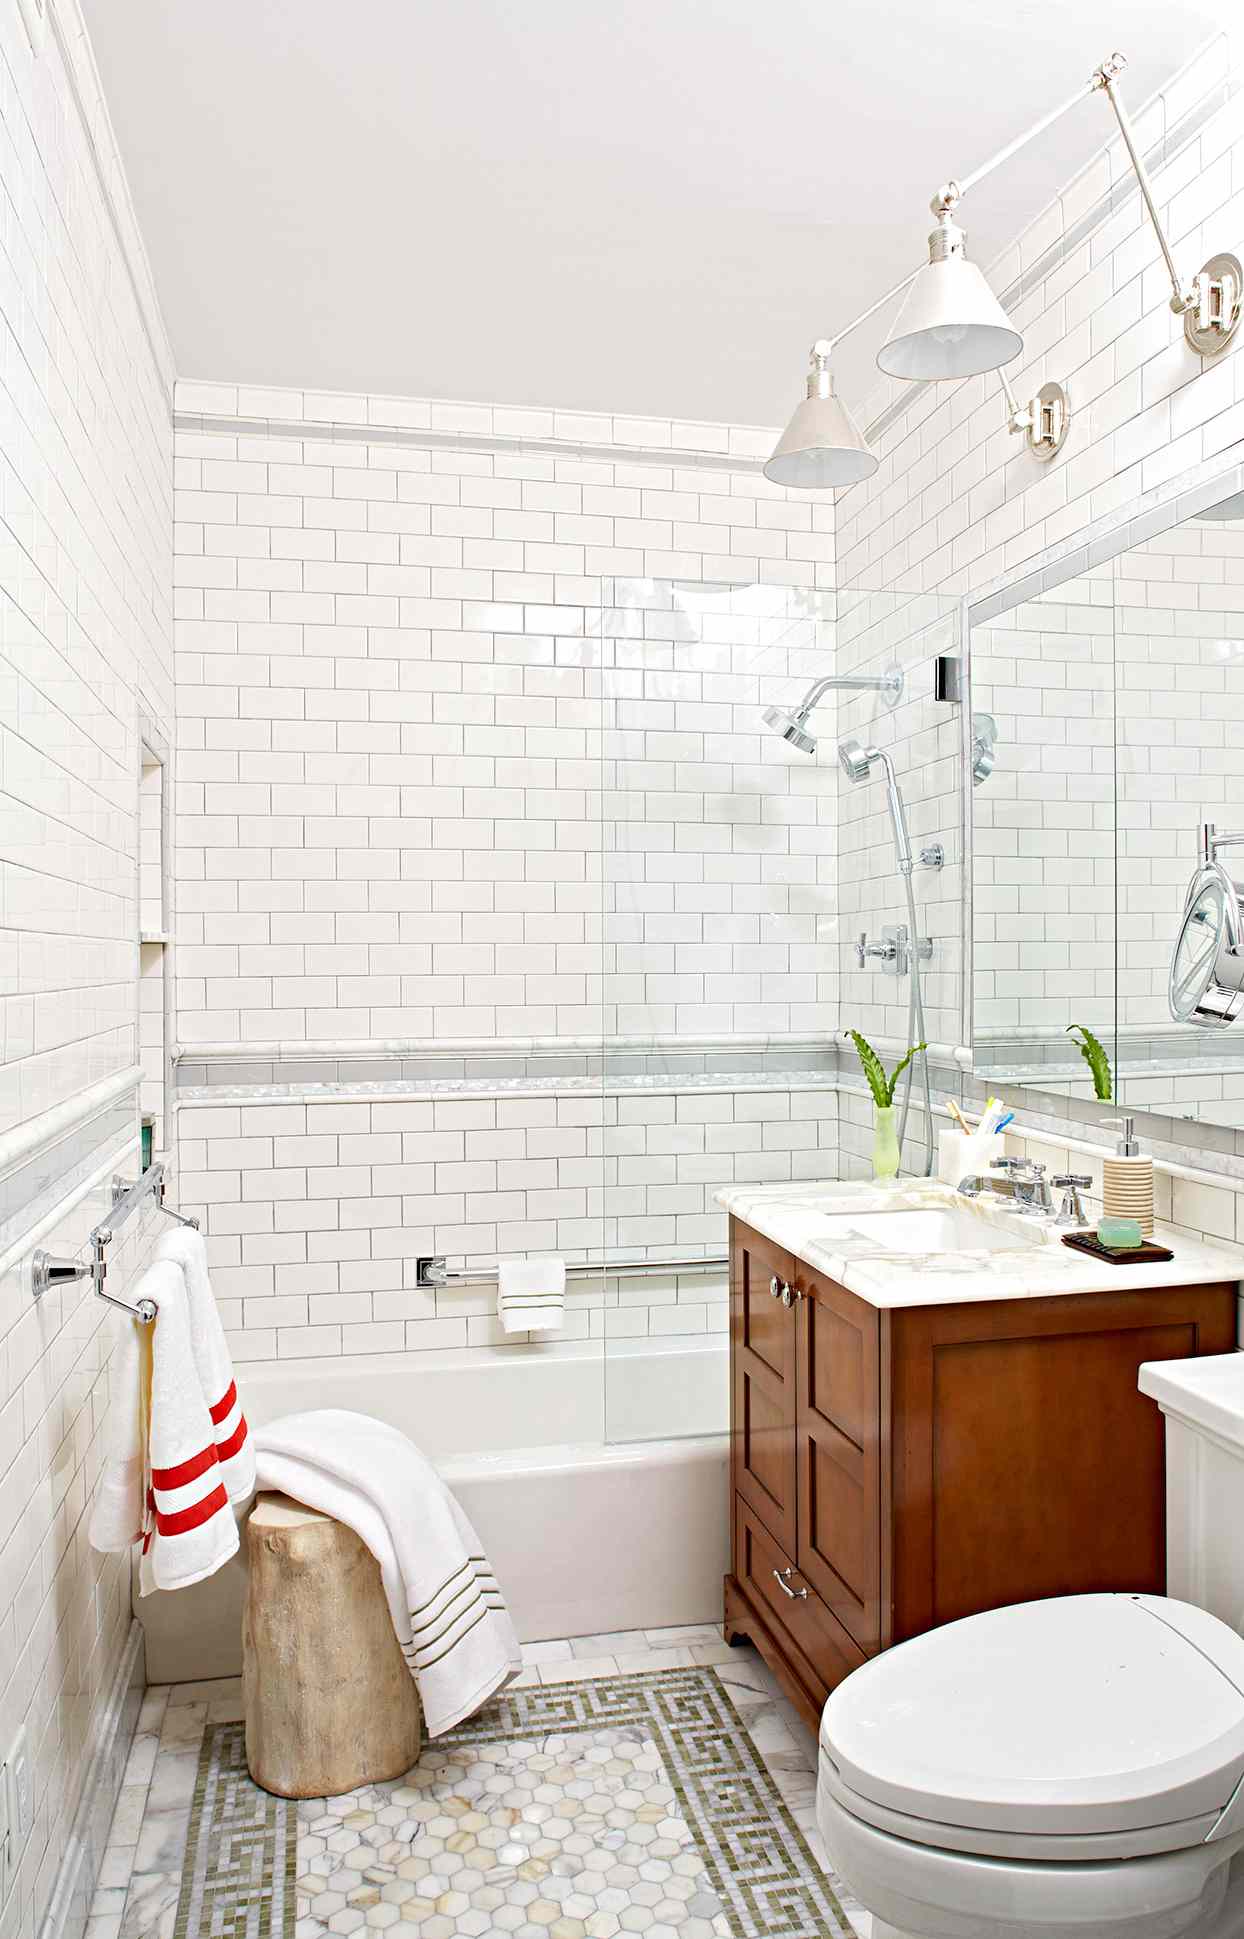 Tile A Shower Enclosure Or Tub Surround, Bath Tub Surround Ideas